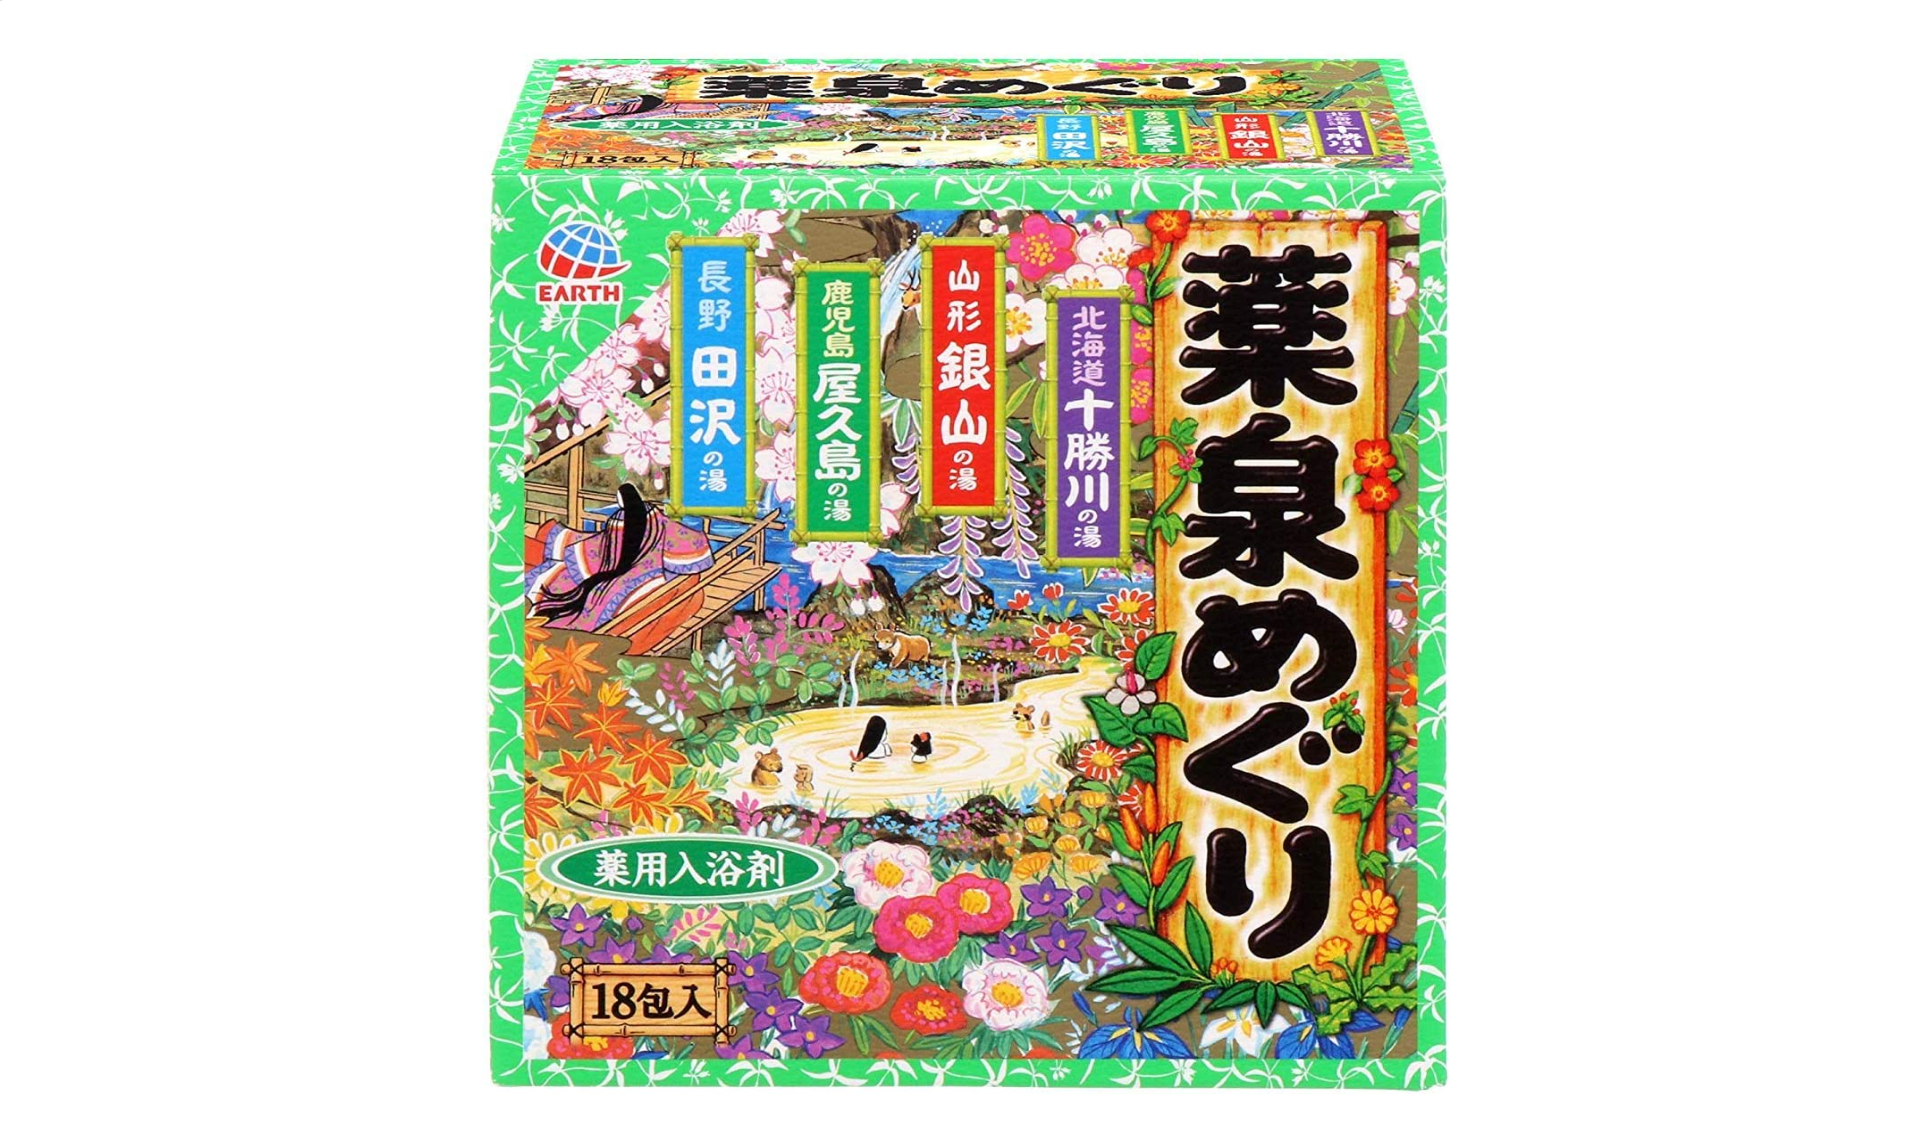 Earth Seiyaku Onsen Bath Powders 36pks【Special Assortment Pack 】